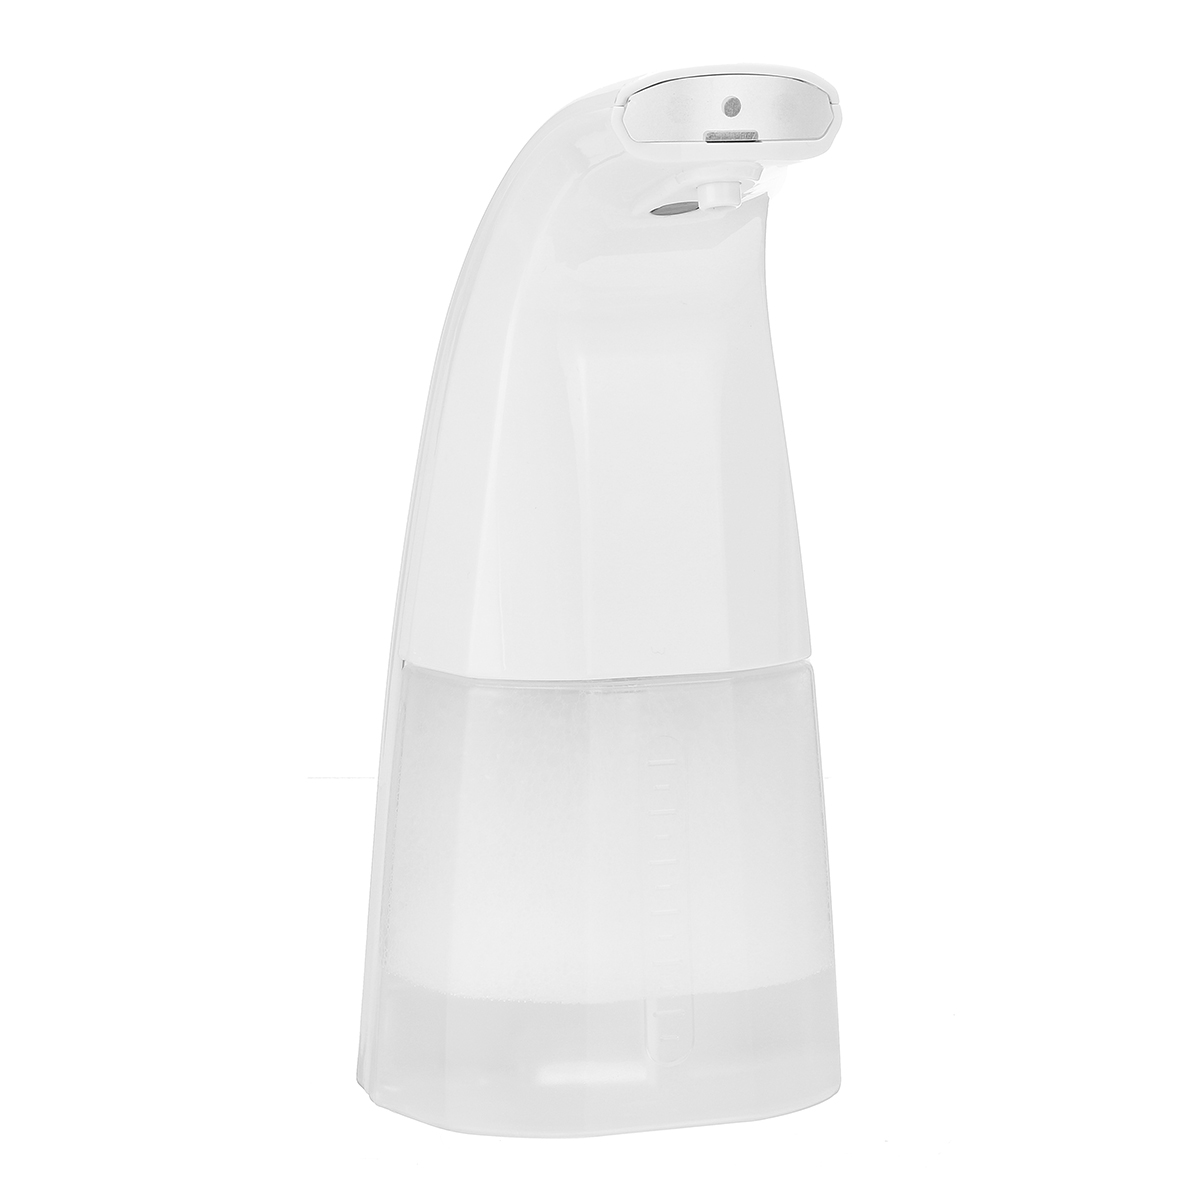 Find Auto Sensor Hand Dispenser Soap Gel Dispenser Foam Holder Hand Wash Bathroom for Sale on Gipsybee.com with cryptocurrencies